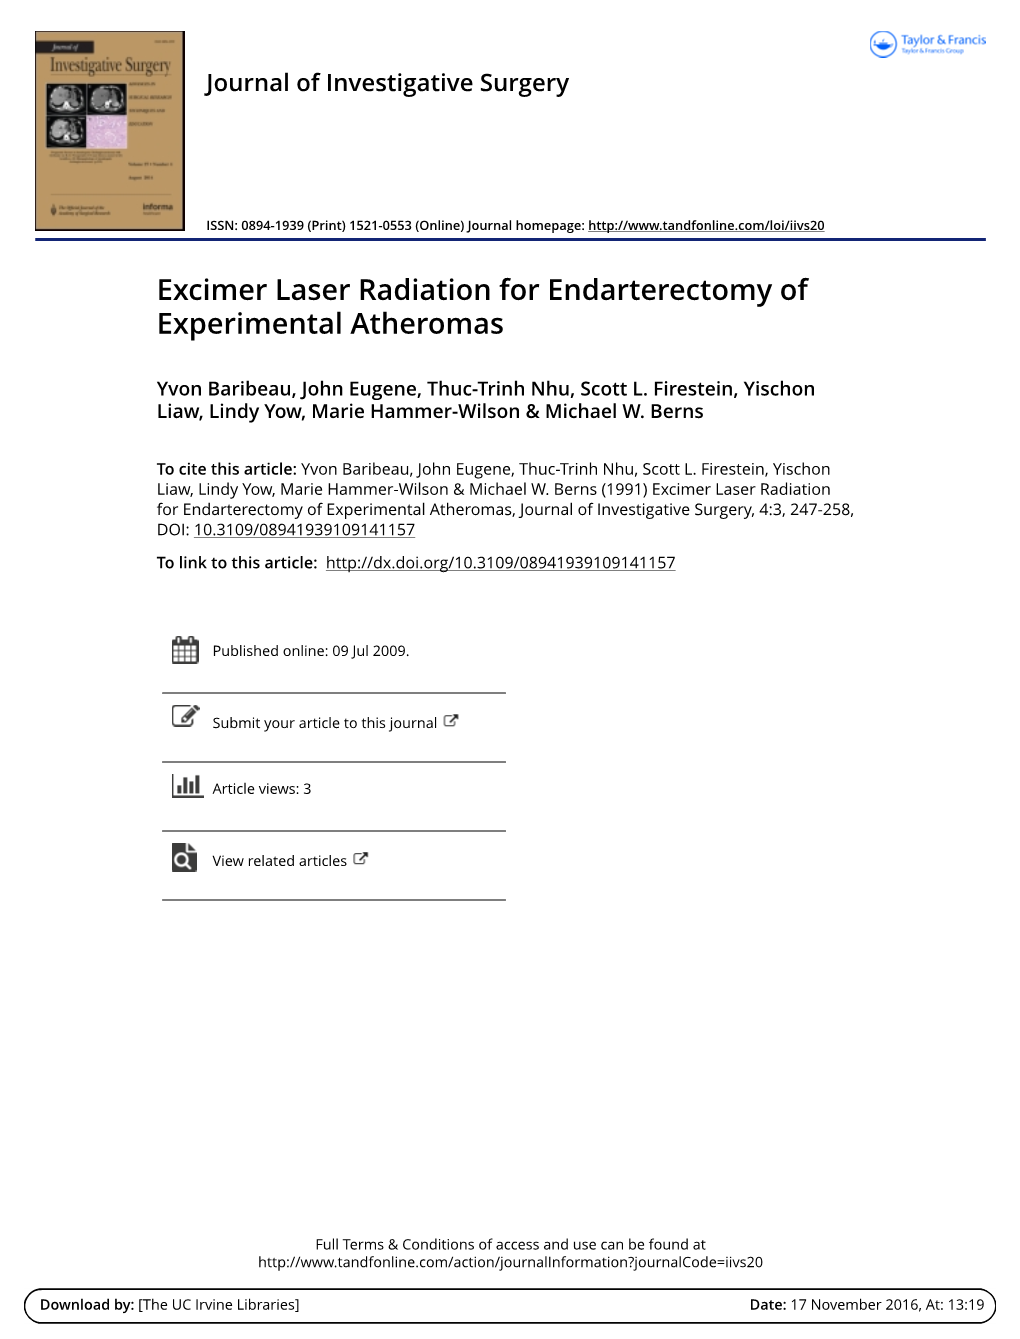 Excimer Laser Radiation for Endarterectomy of Experimental Atheromas